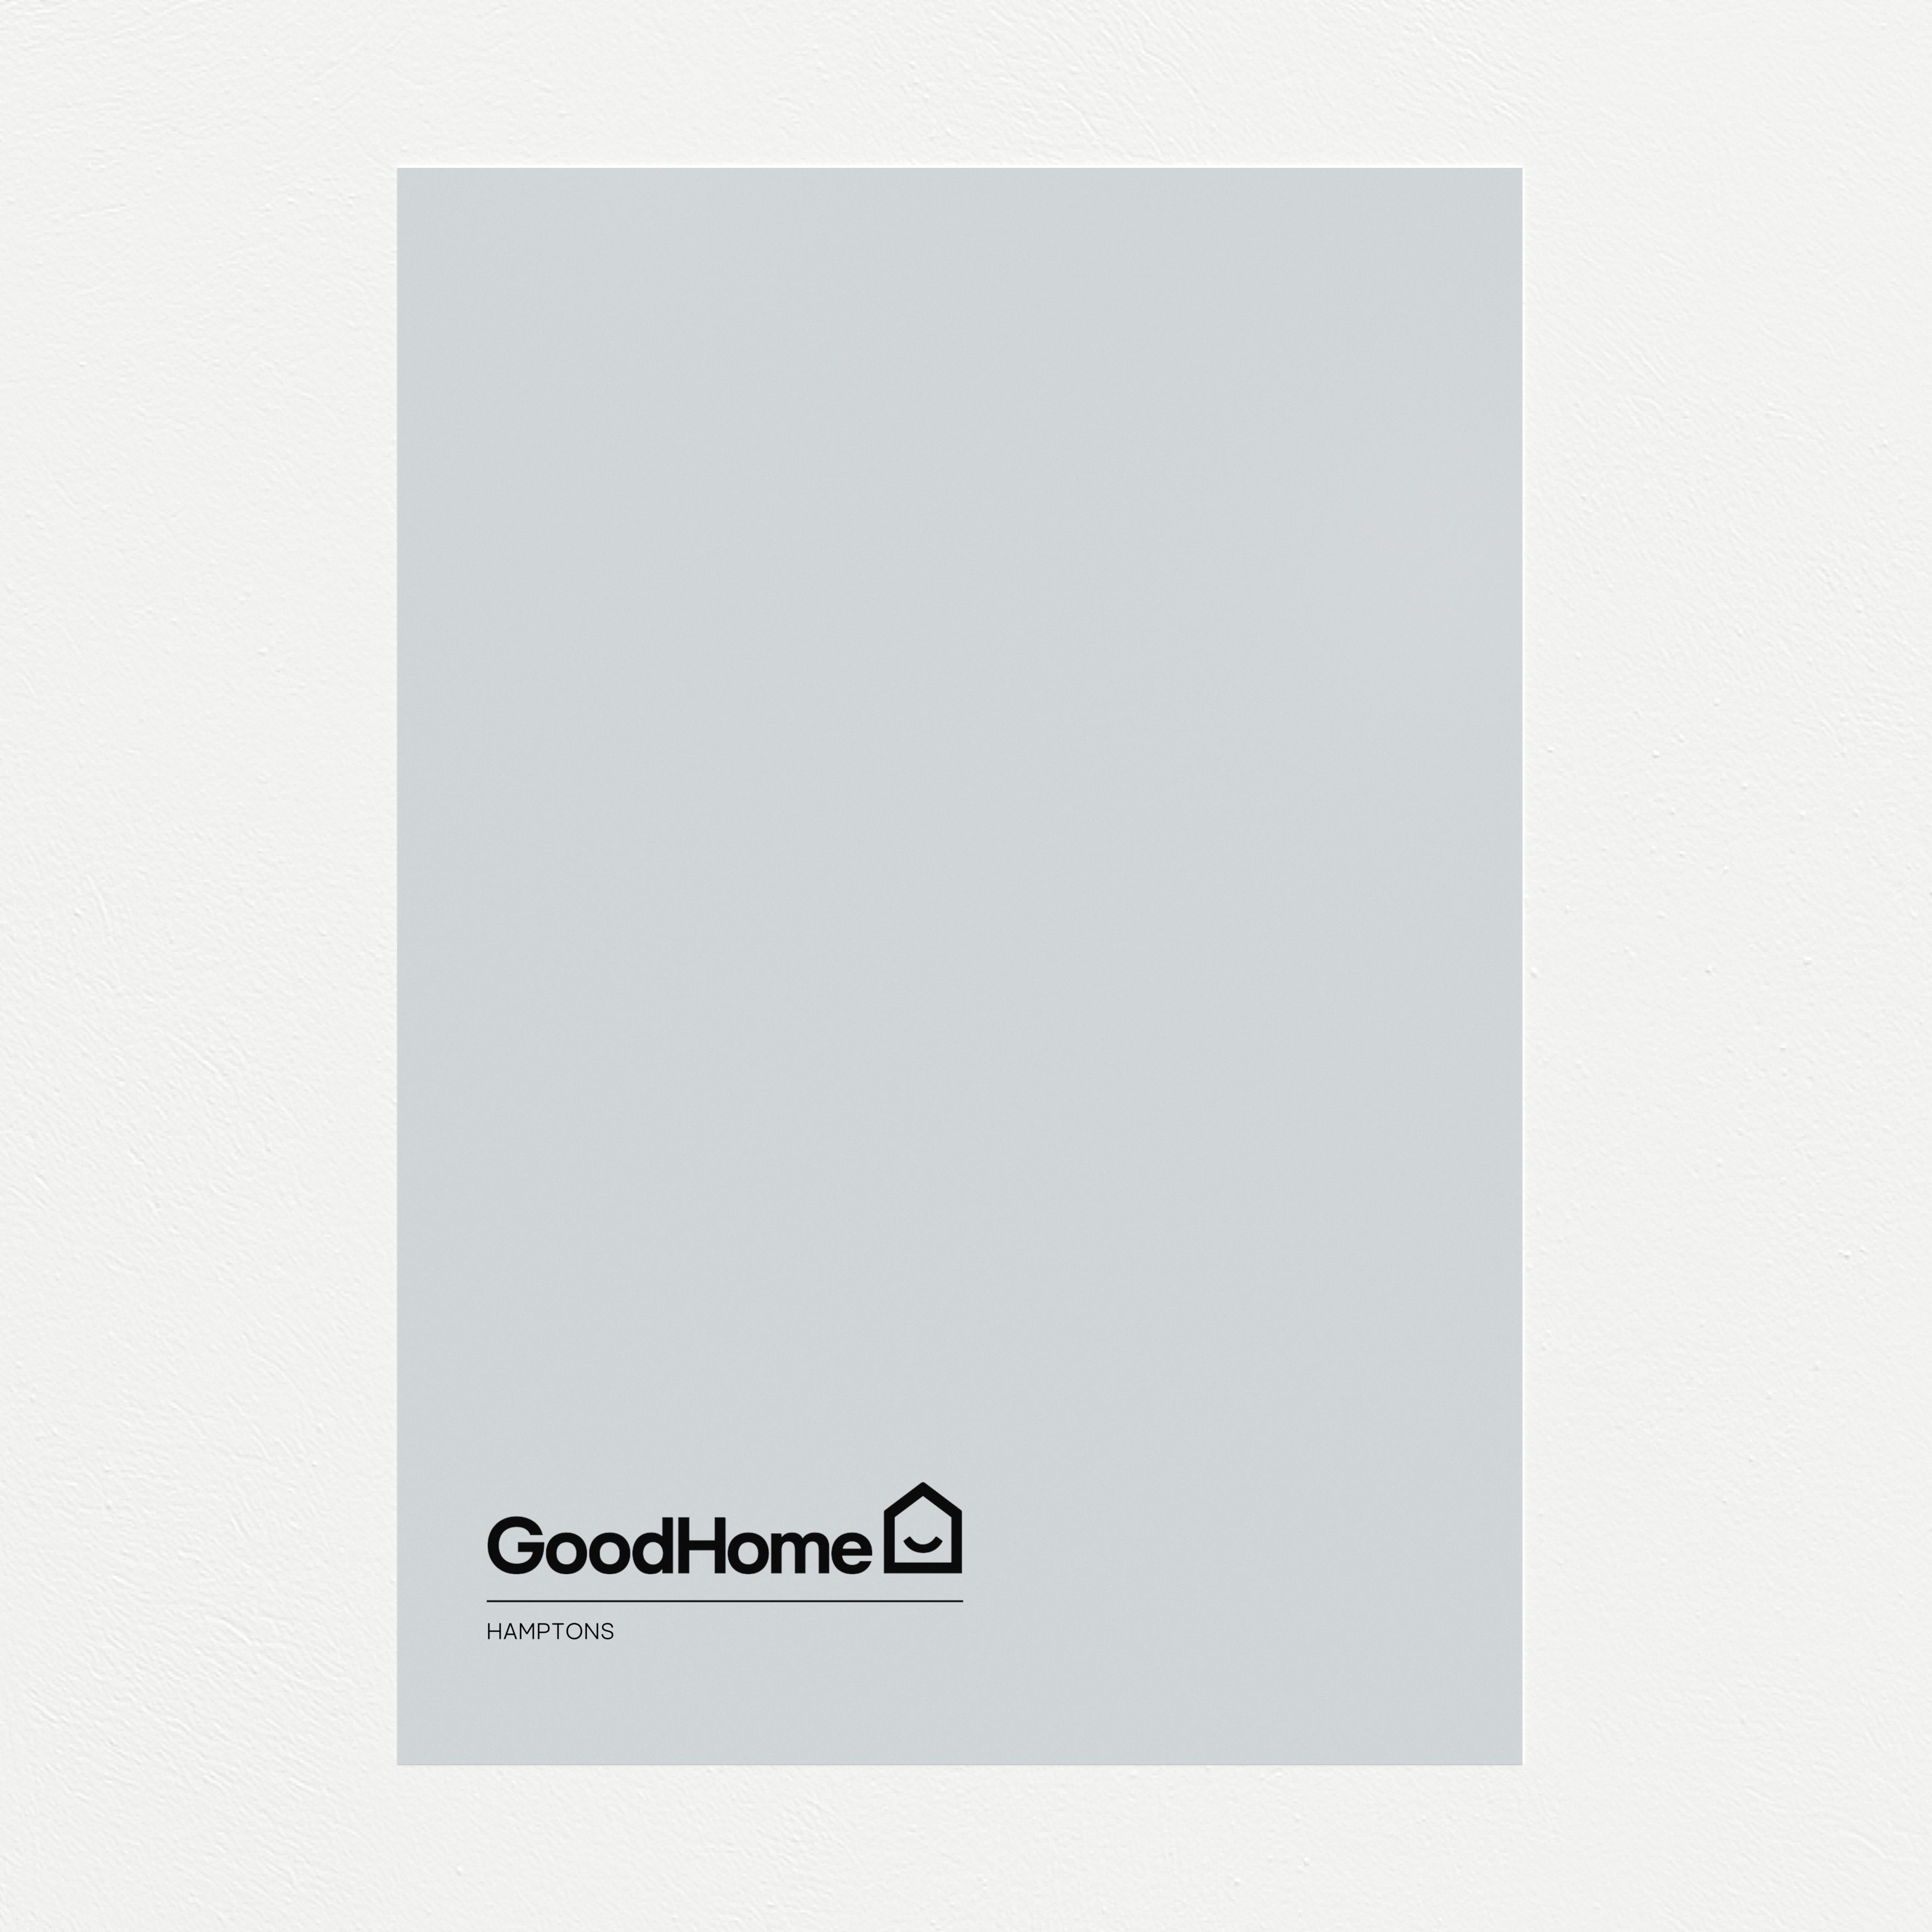 GoodHome Ultra Cover Hamptons Matt Emulsion paint, 50ml